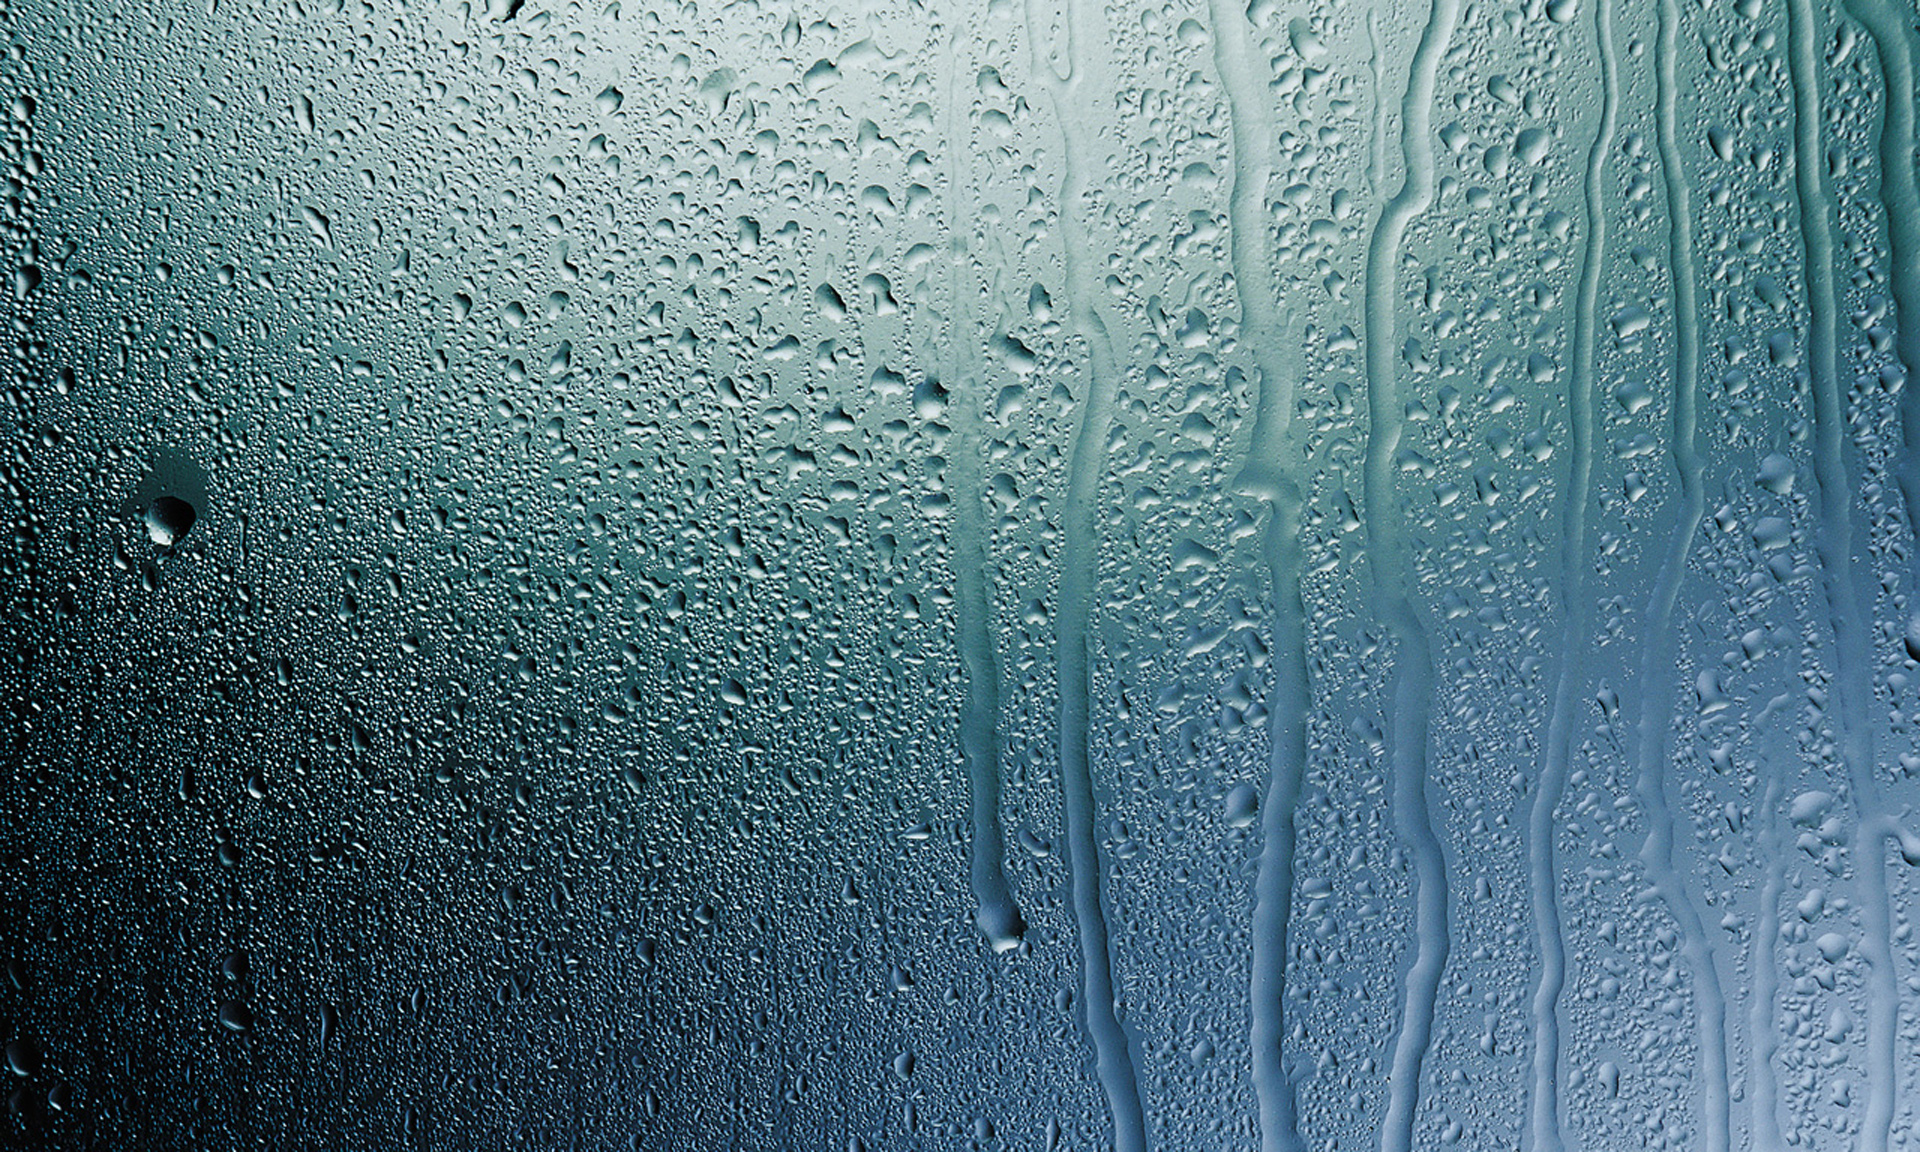 condensation - desktop wallpaper